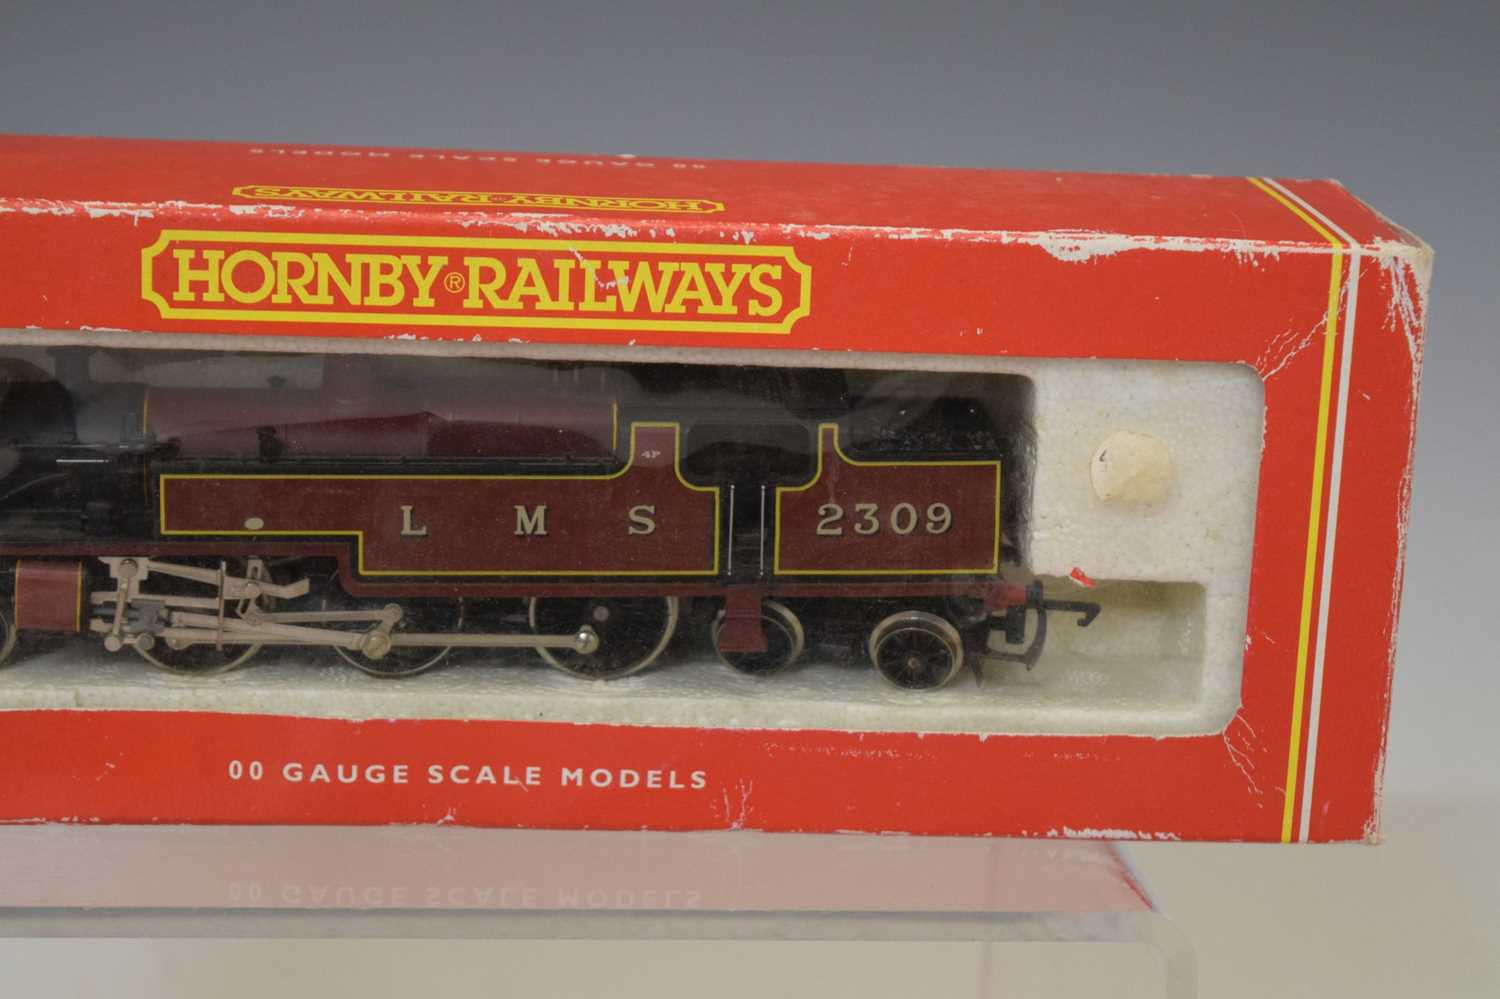 Hornby Railways - Two boxed 00 gauge railway trainset locomotives - Image 4 of 7